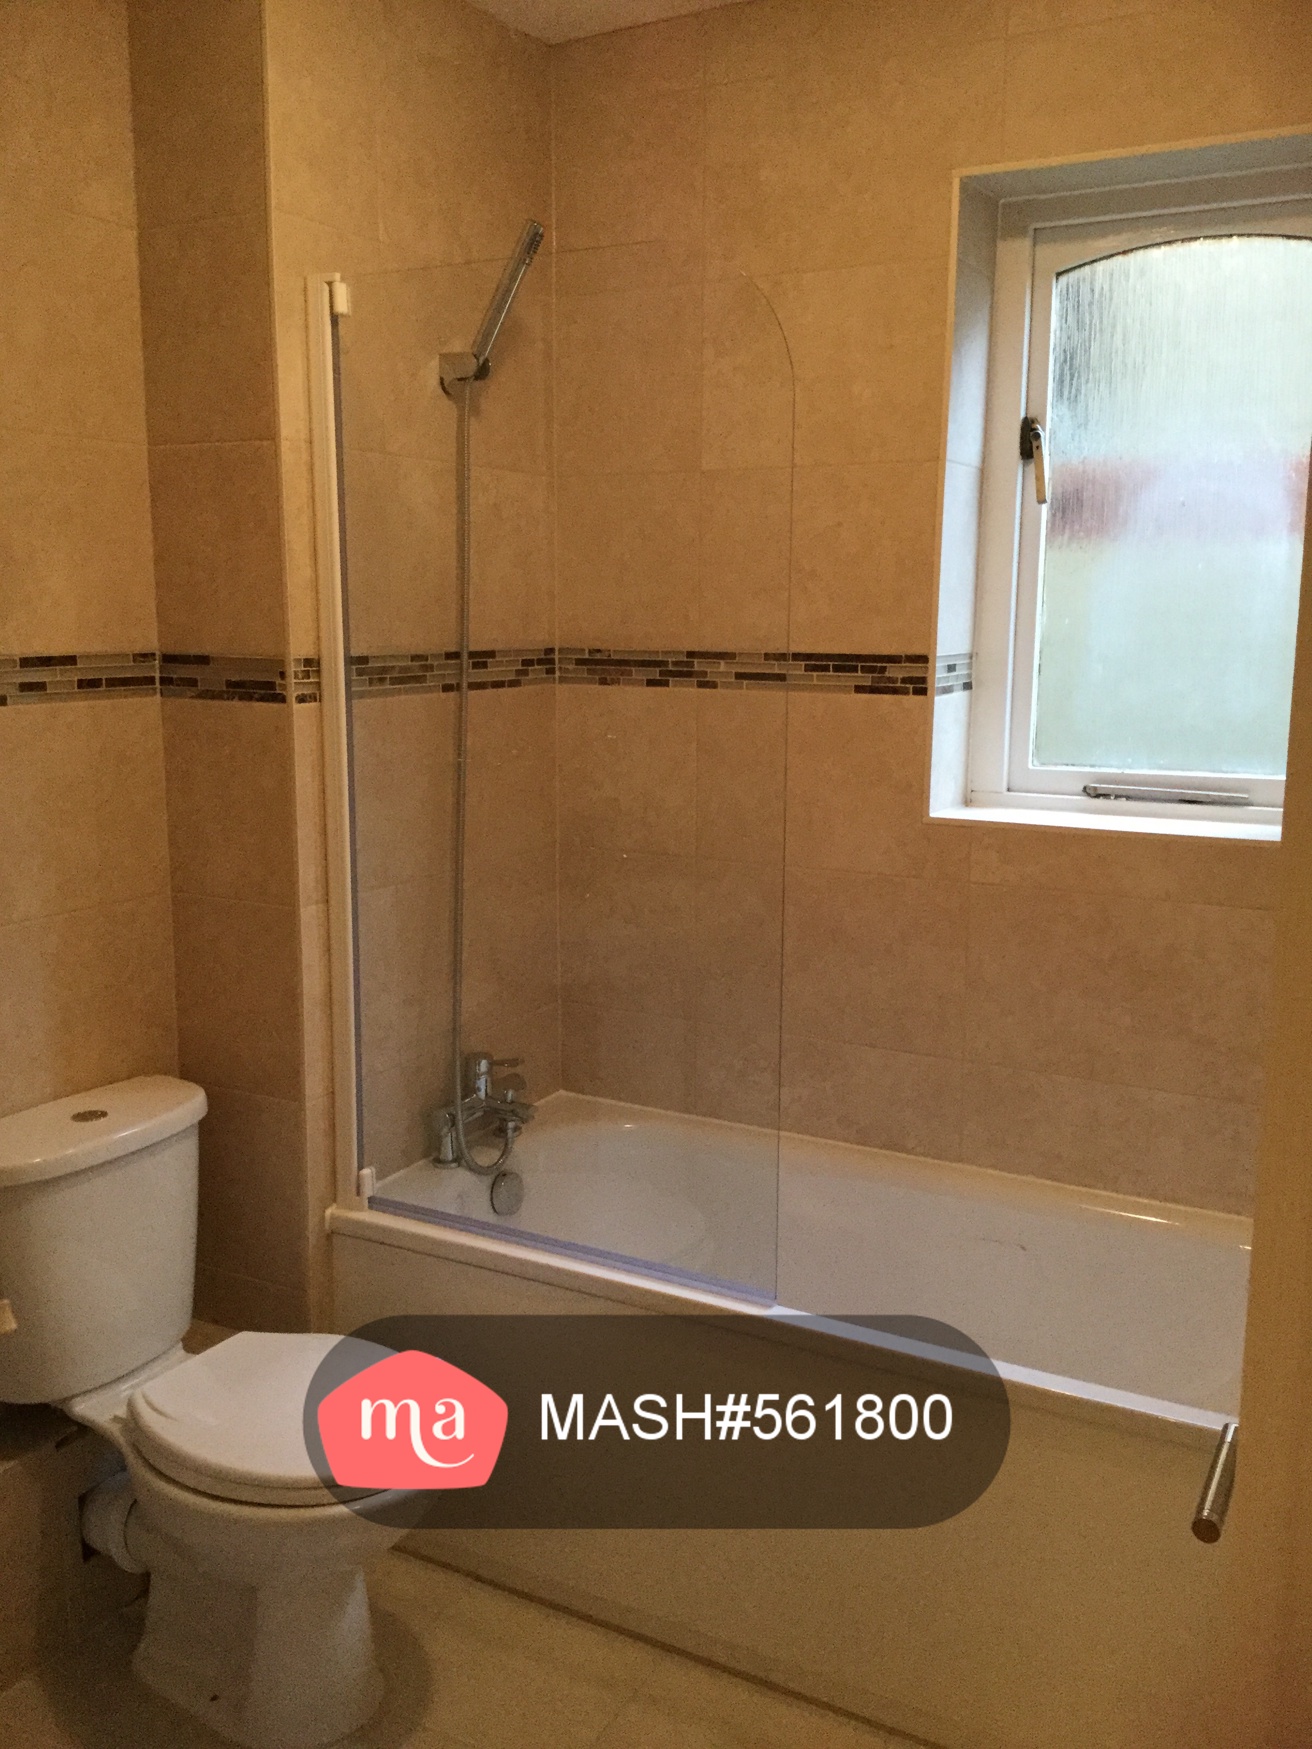 1 Bedroom Flat to rent in Sittingbourne - Mashroom